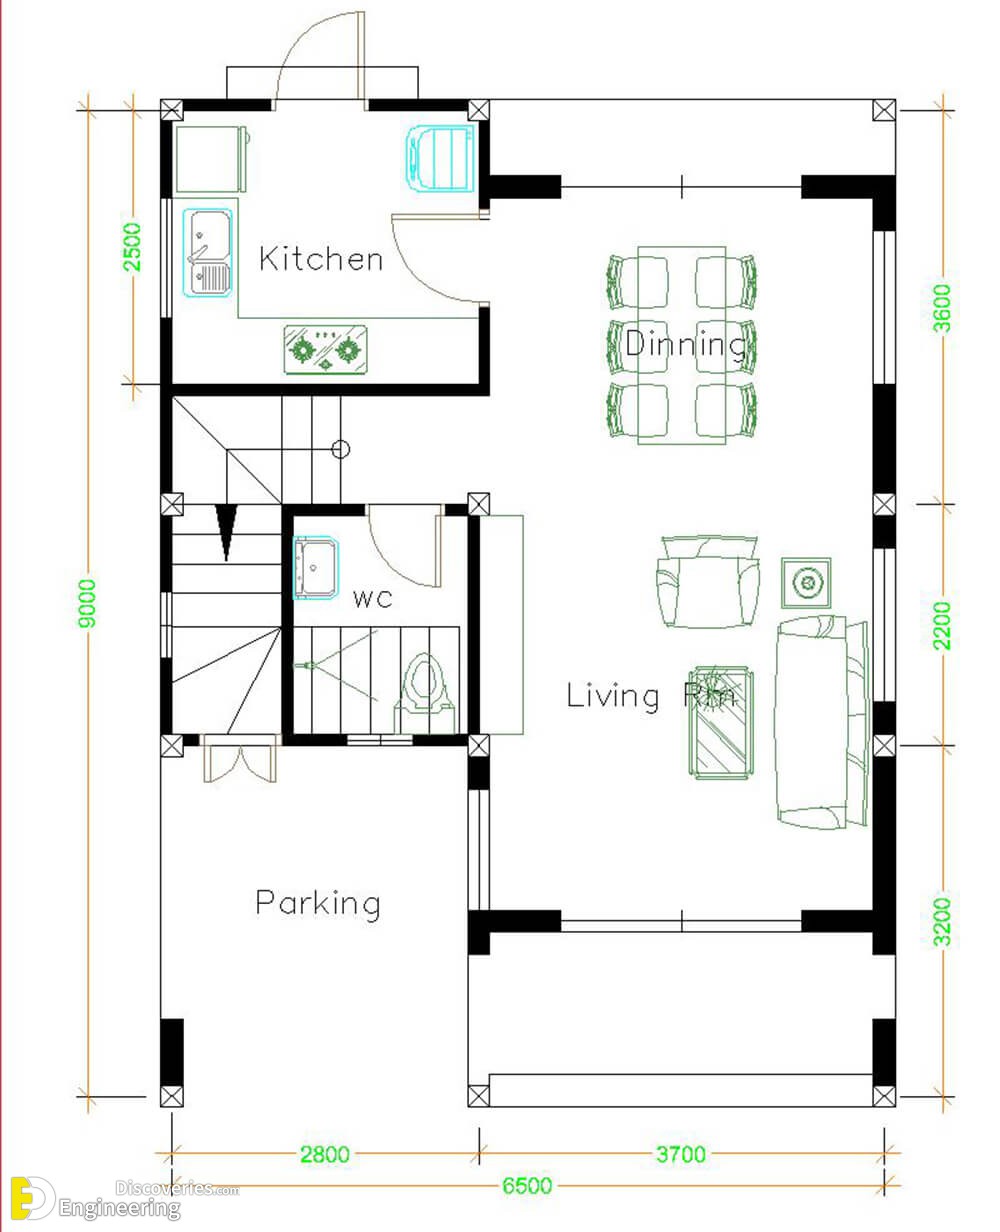 Bedroom Home Design Plans Ideas